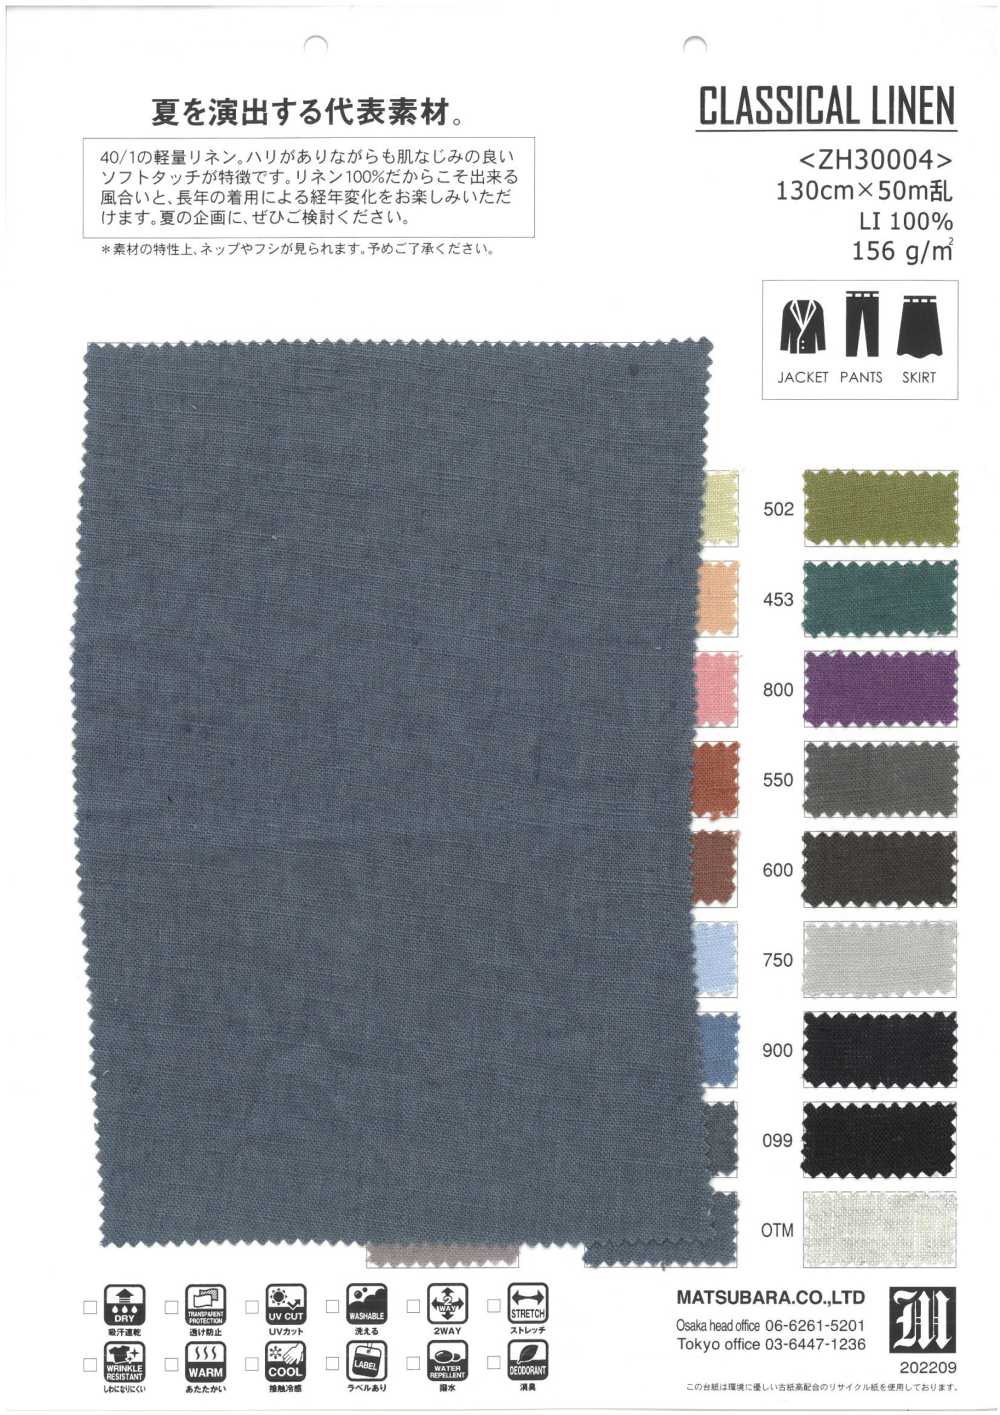 ZH30004 CLASSICAL LINEN[Textile / Fabric] Matsubara